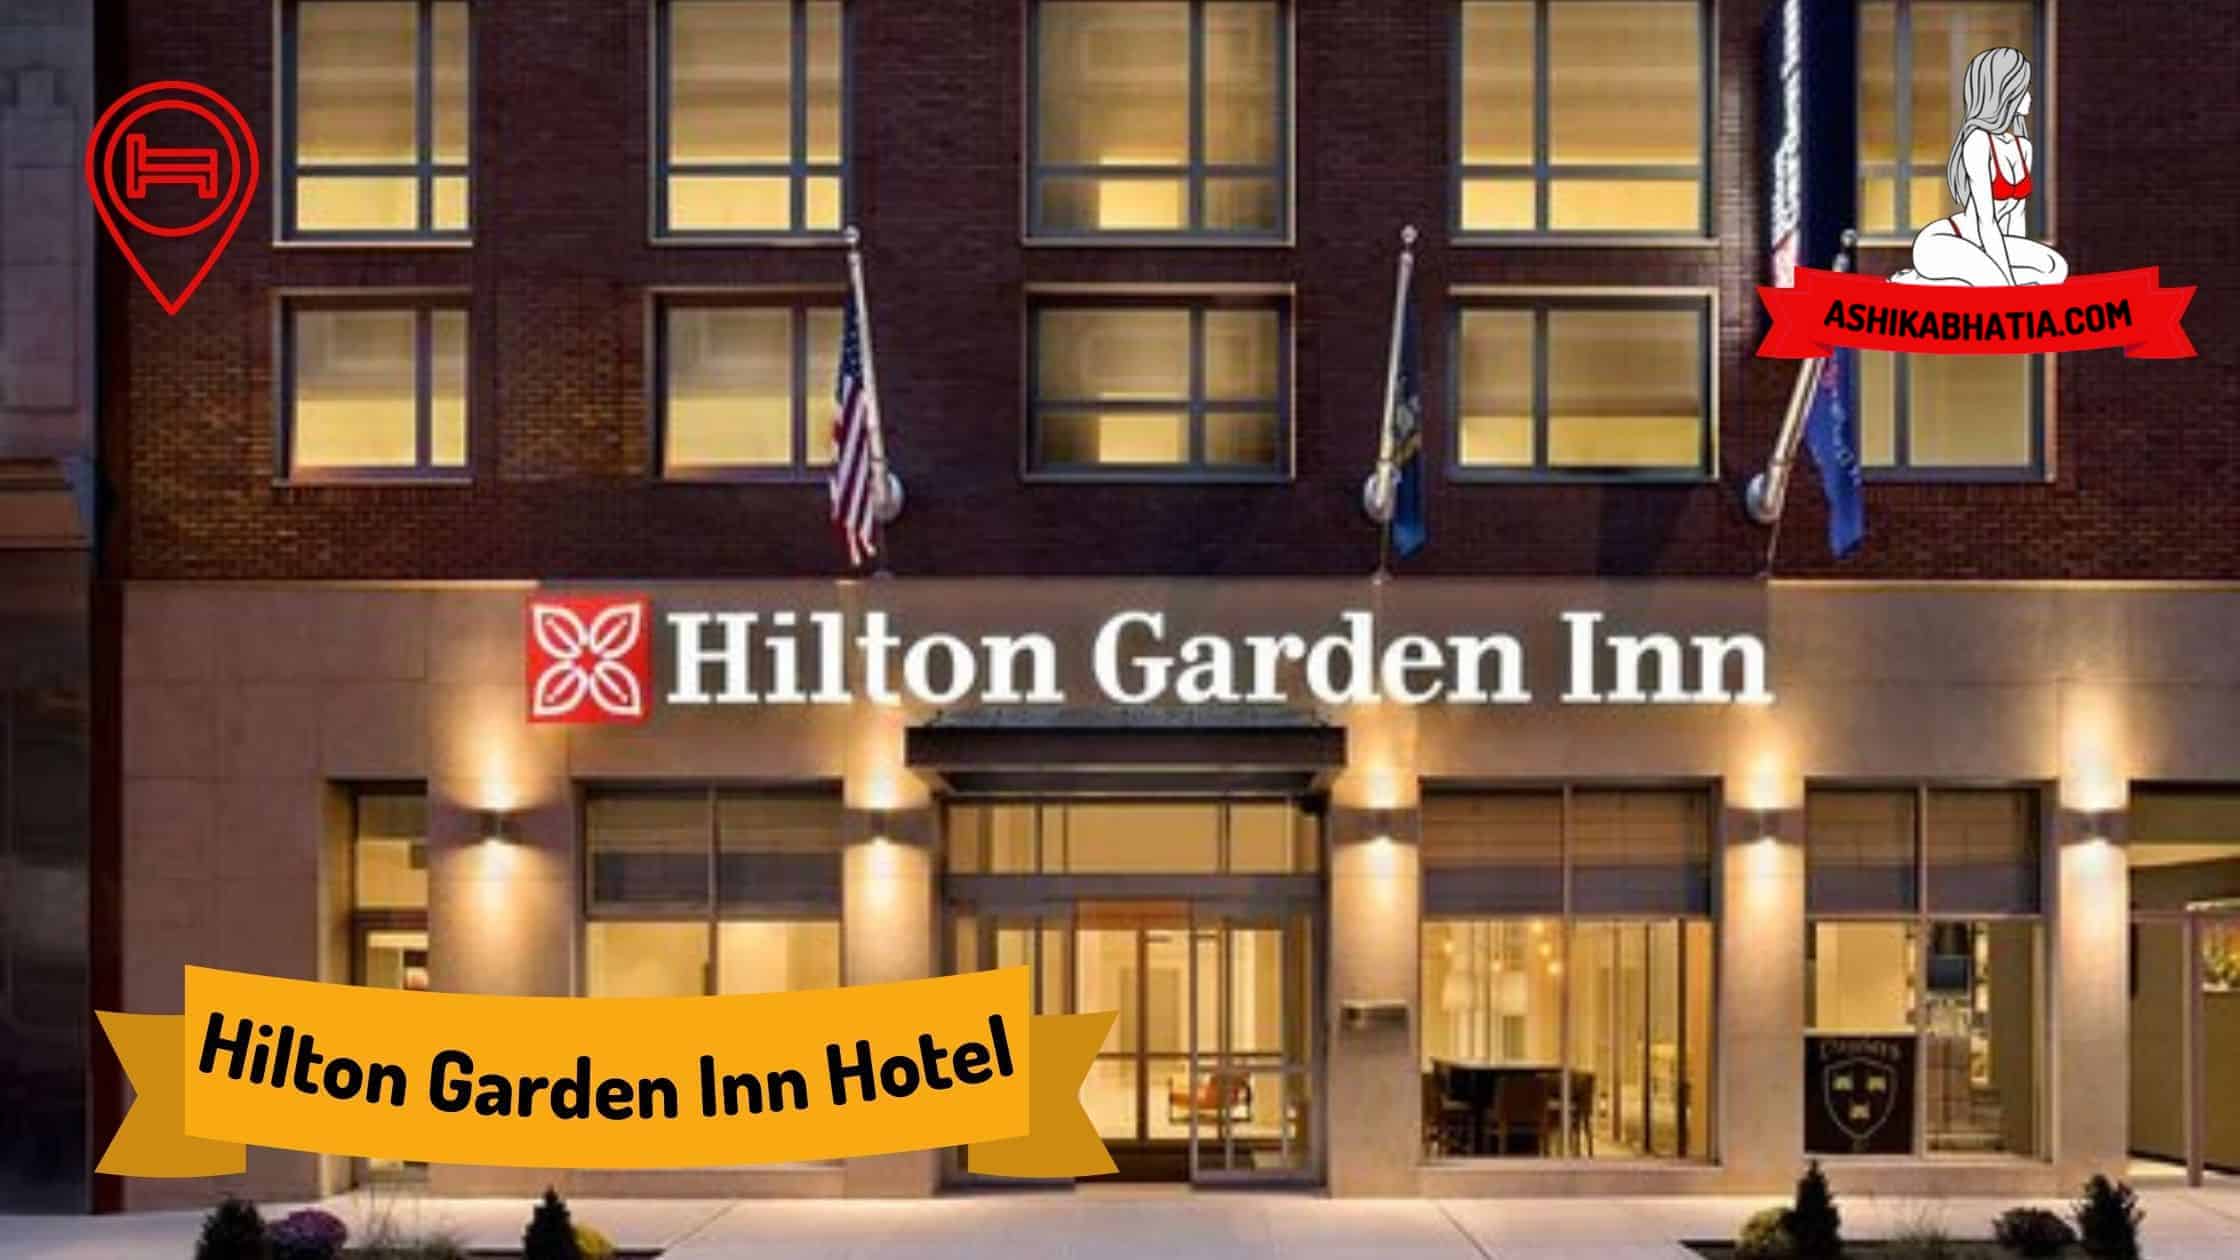 Escorts Services In Hilton Garden Inn Hotel